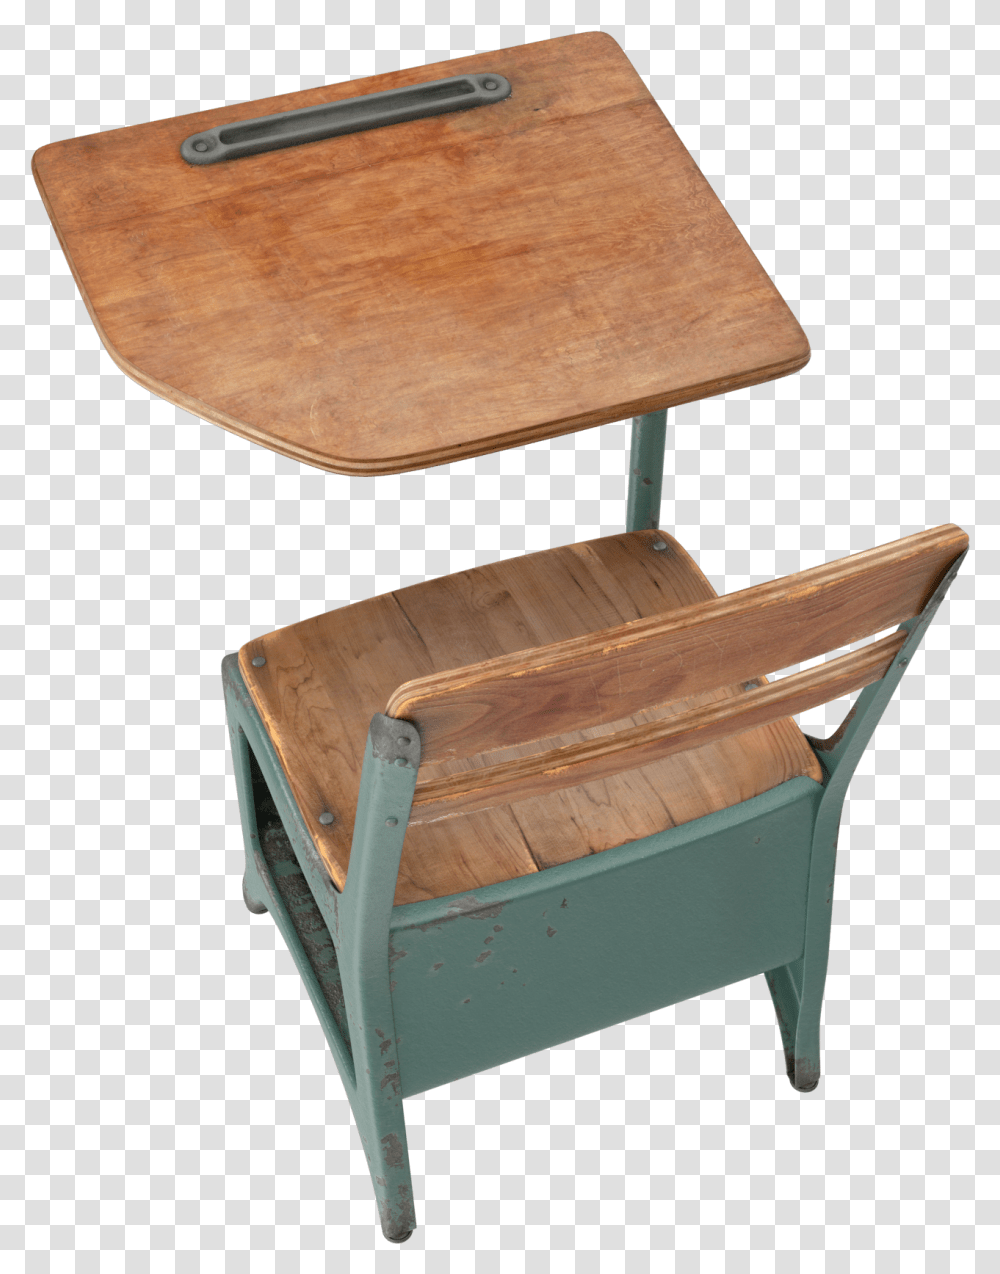 Antique School Desk Image Outdoor Furniture, Chair, Plywood, Tabletop, Pen Transparent Png